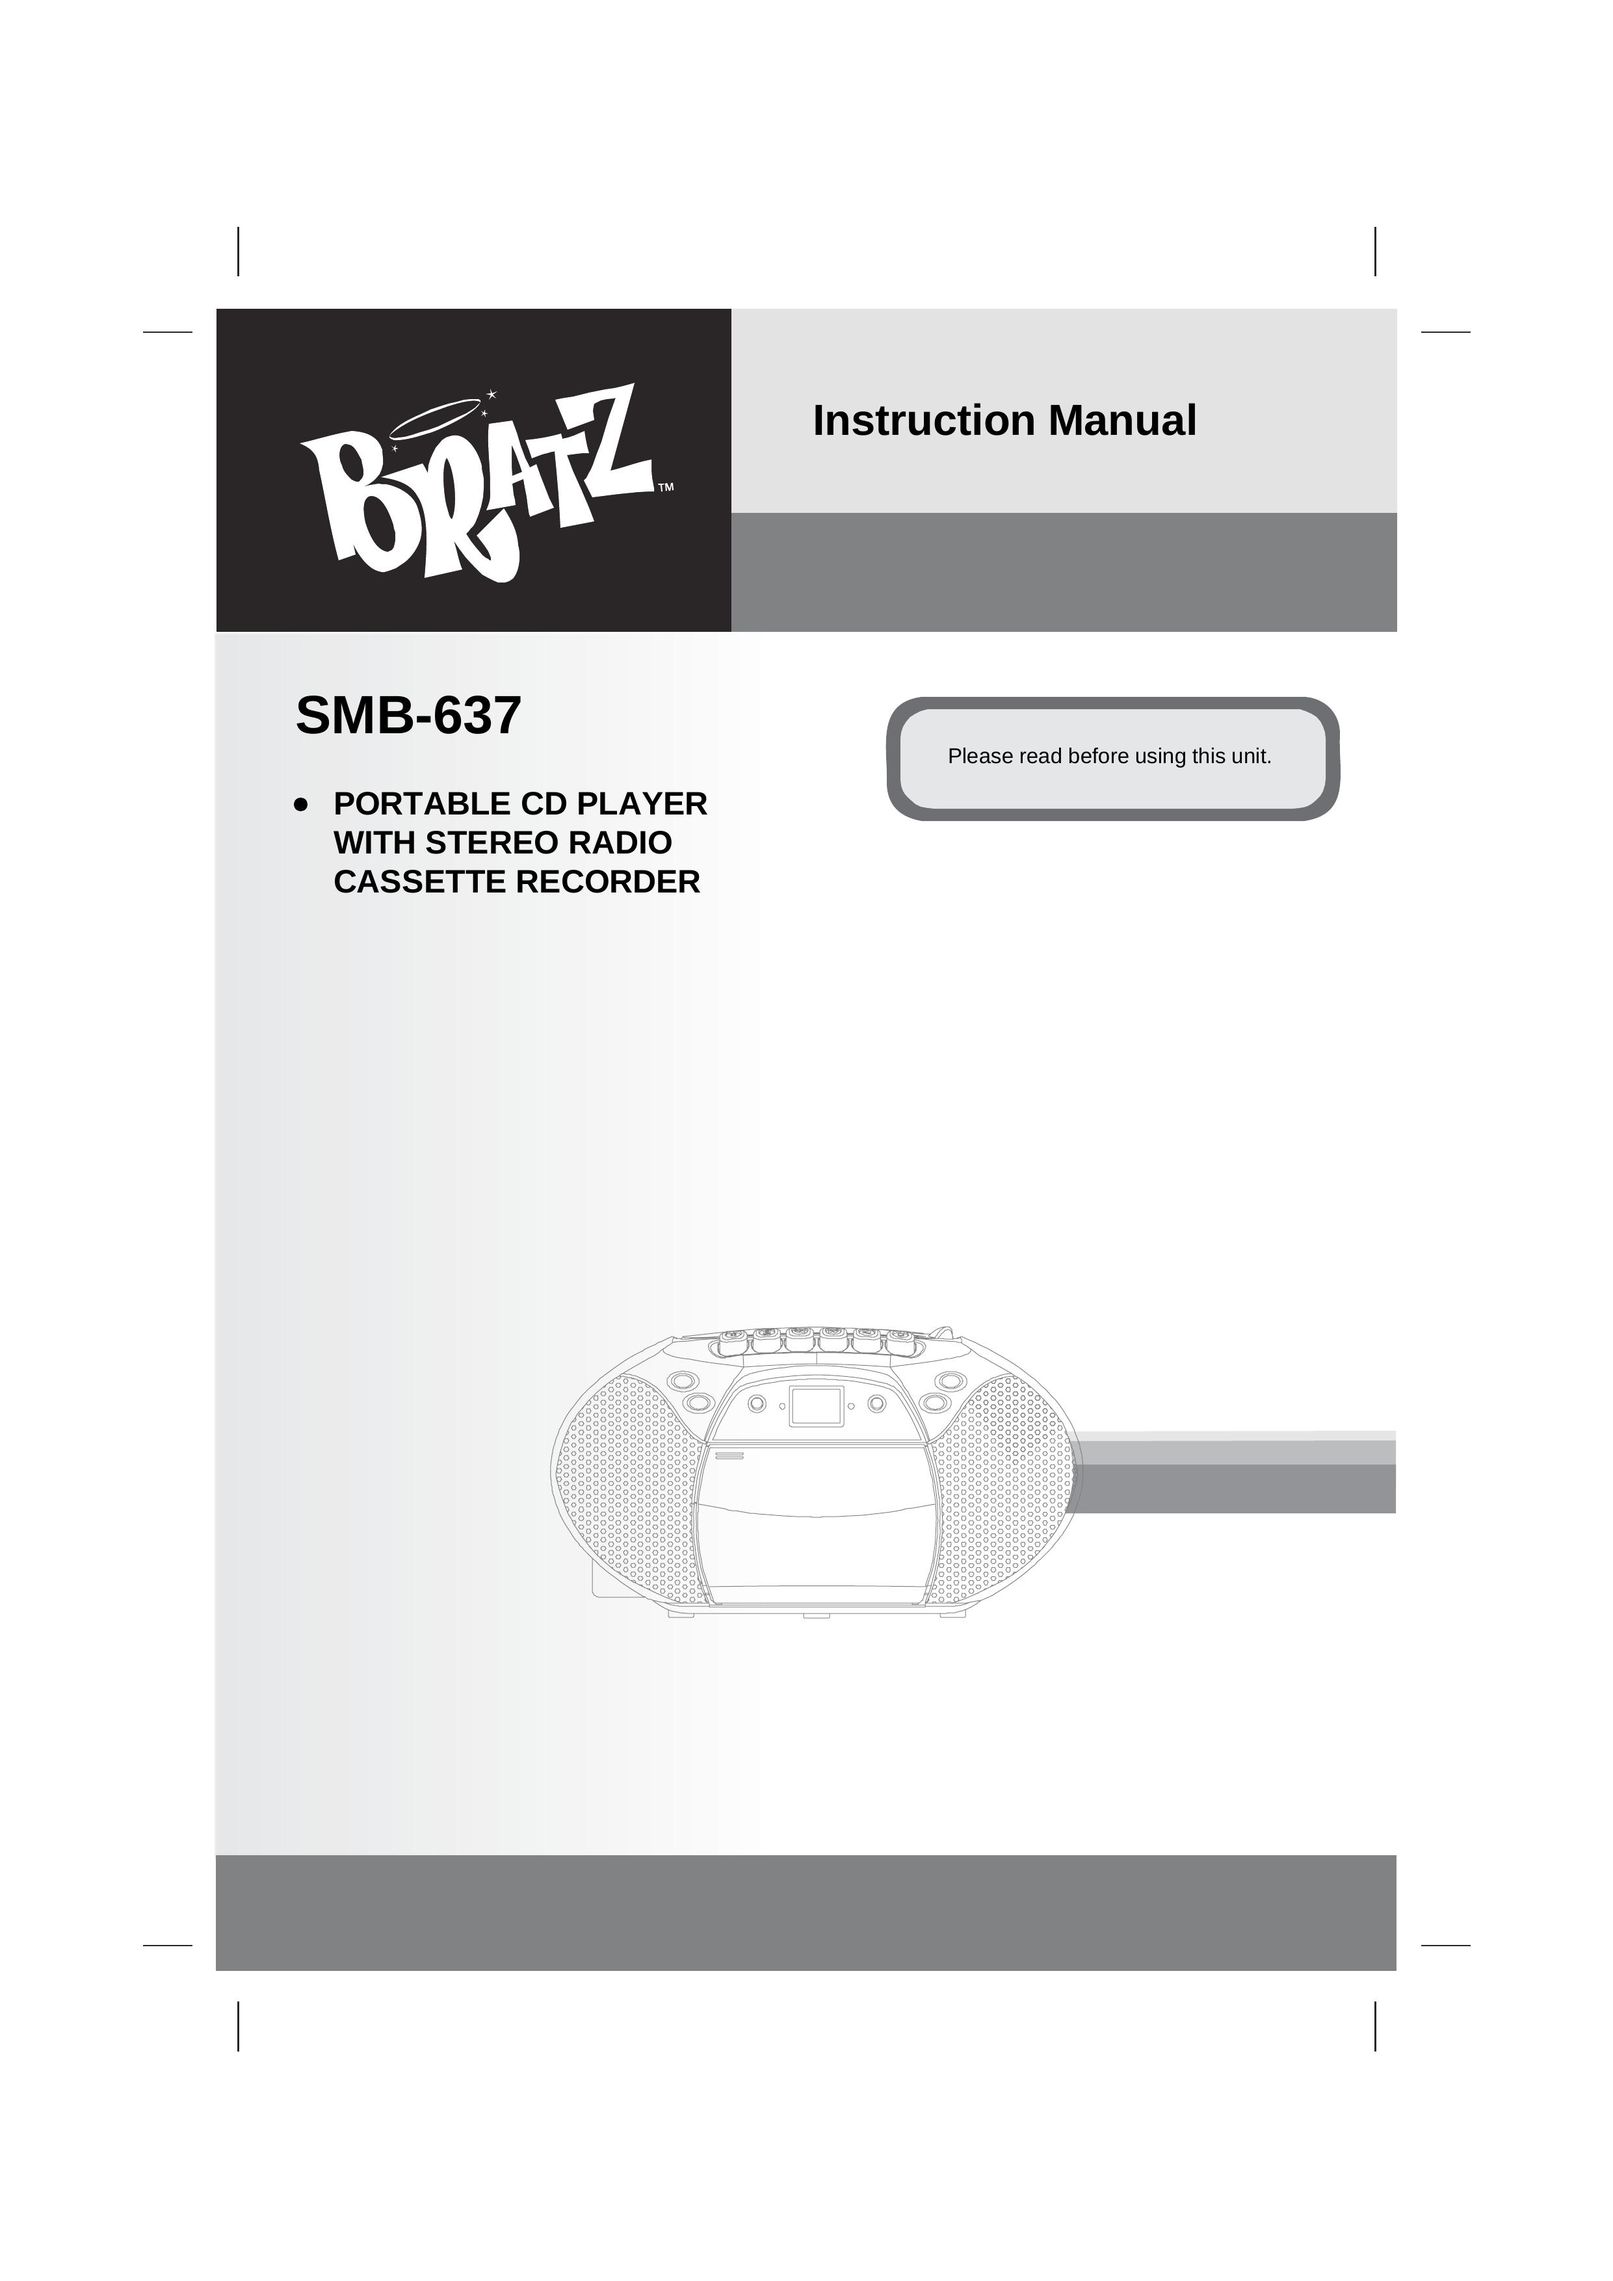 The Singing Machine SMB-637 CD Player User Manual